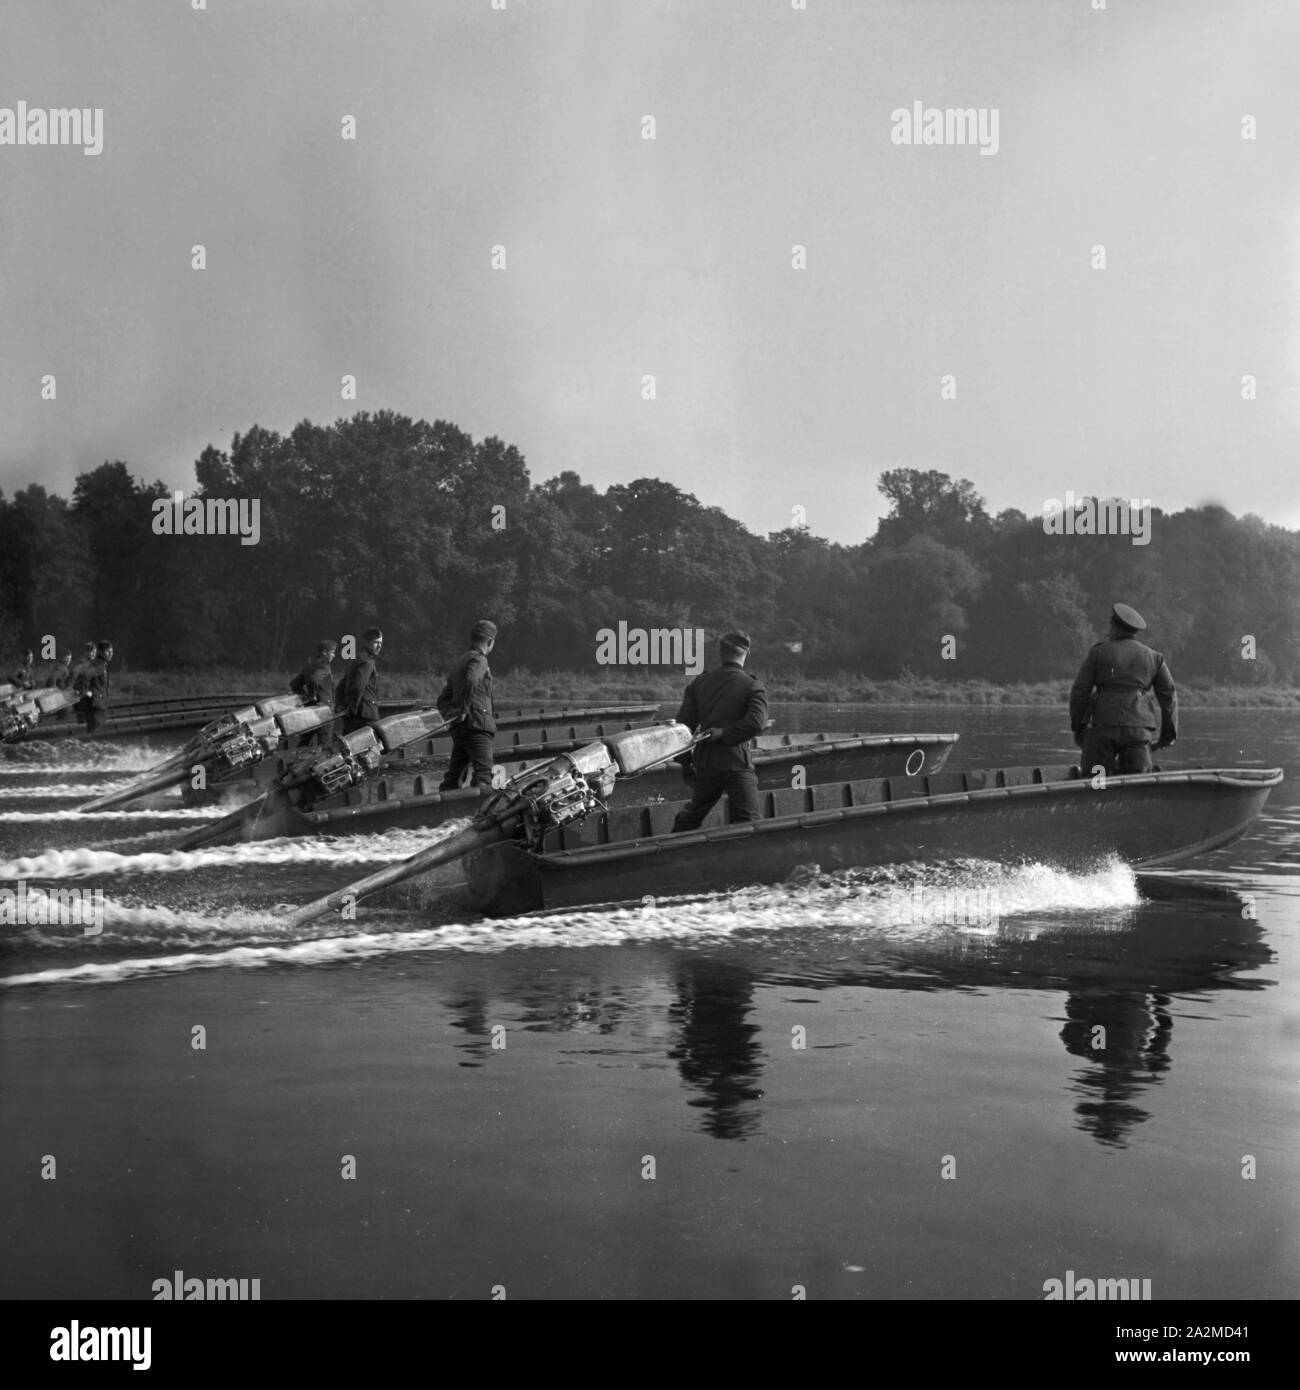 Original-Bildunterschrift: Pionier-Sturmboote fahren Übungen, Deutschland 1940er Jahre. Unidad de Ingeniería storm barcos ejercer, Alemania 1940. Foto de stock